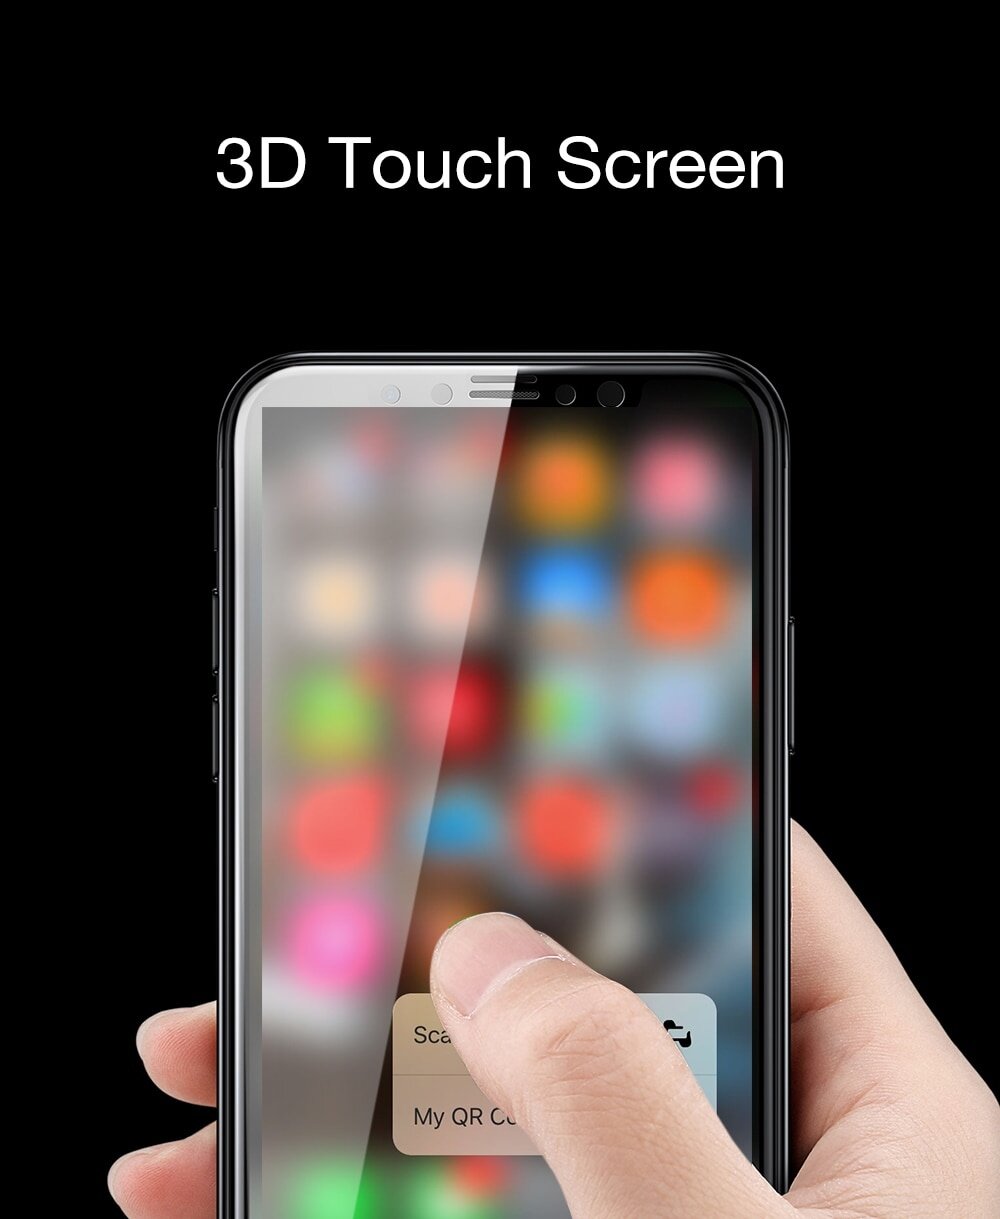 Baseus Silk-screen 3D Soft PET Edge Tempered Glass Film Shatterproof Screen Protector for iPhone X 0.23mm